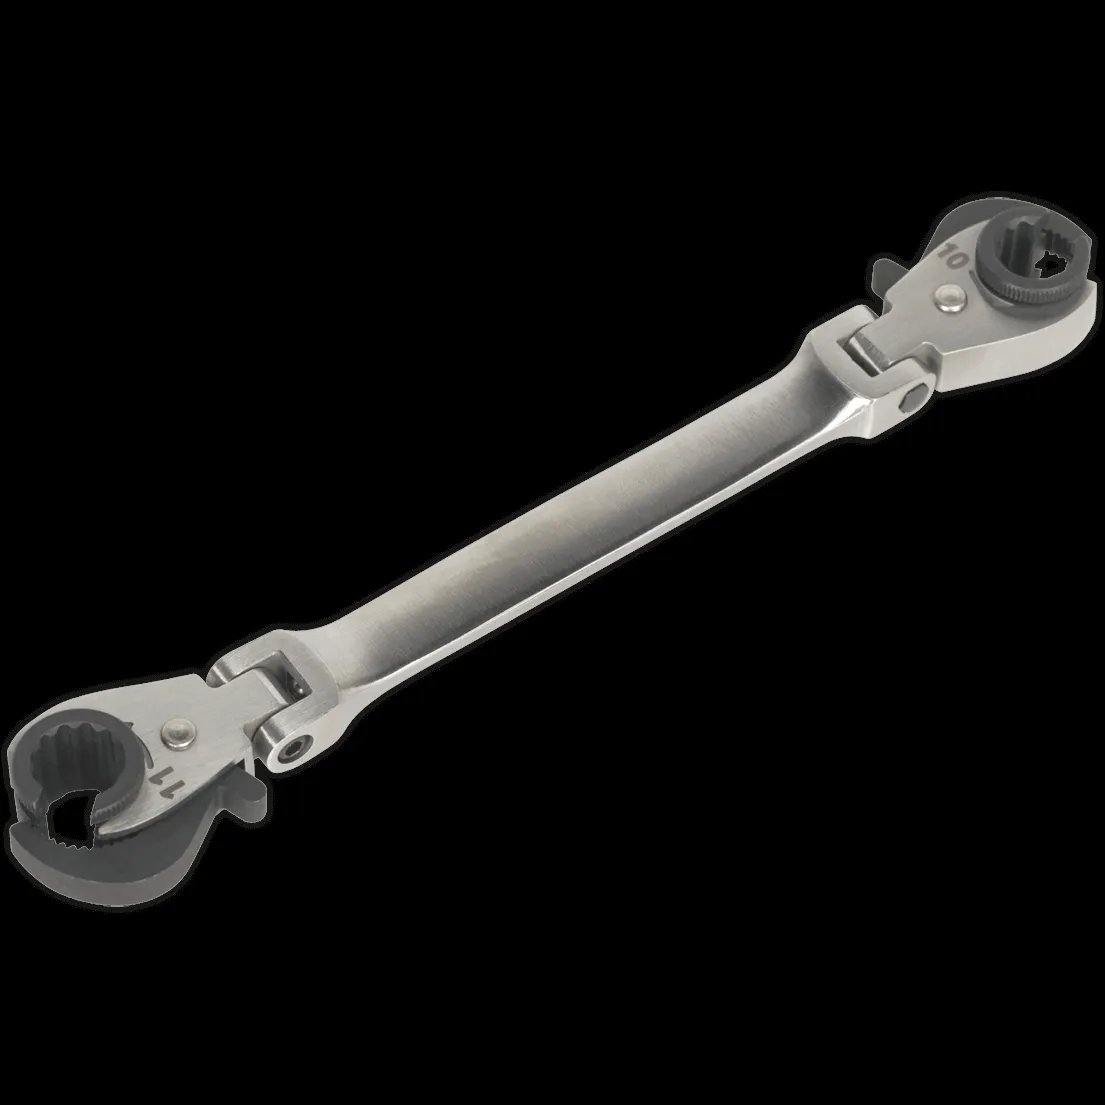 Sealey Flexible Head Ratchet Flare Nut Spanner - 10mm x 11mm